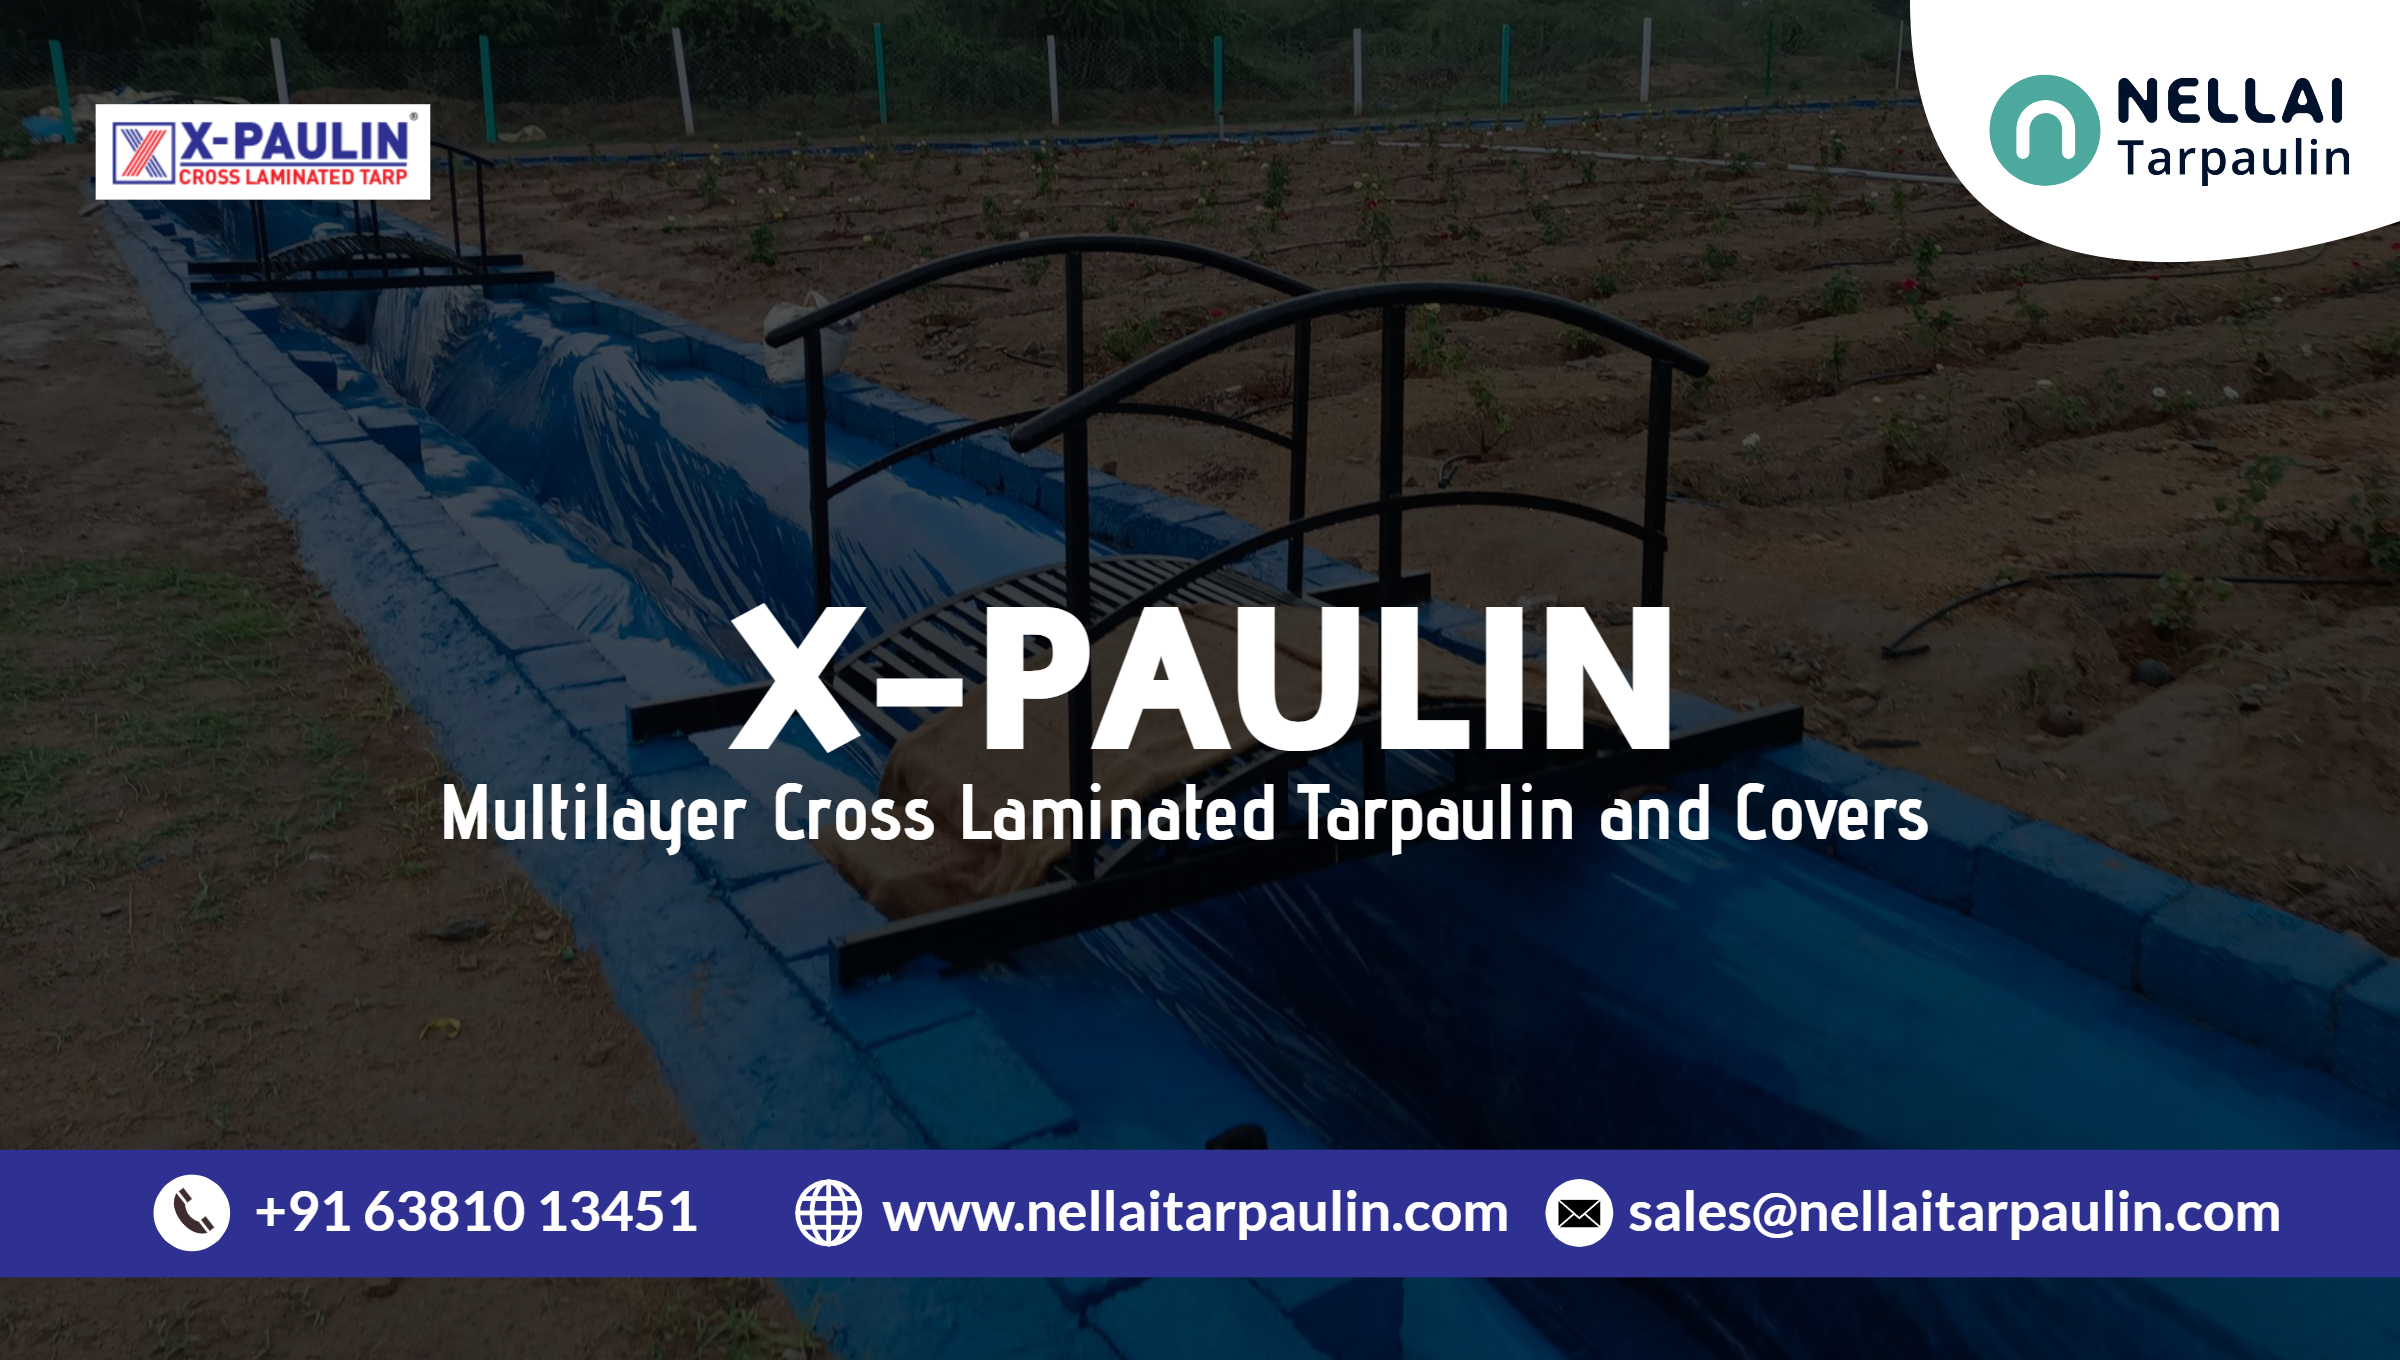 X-PAULIN - Multilayer Cross Laminated Tarpaulin and Covers